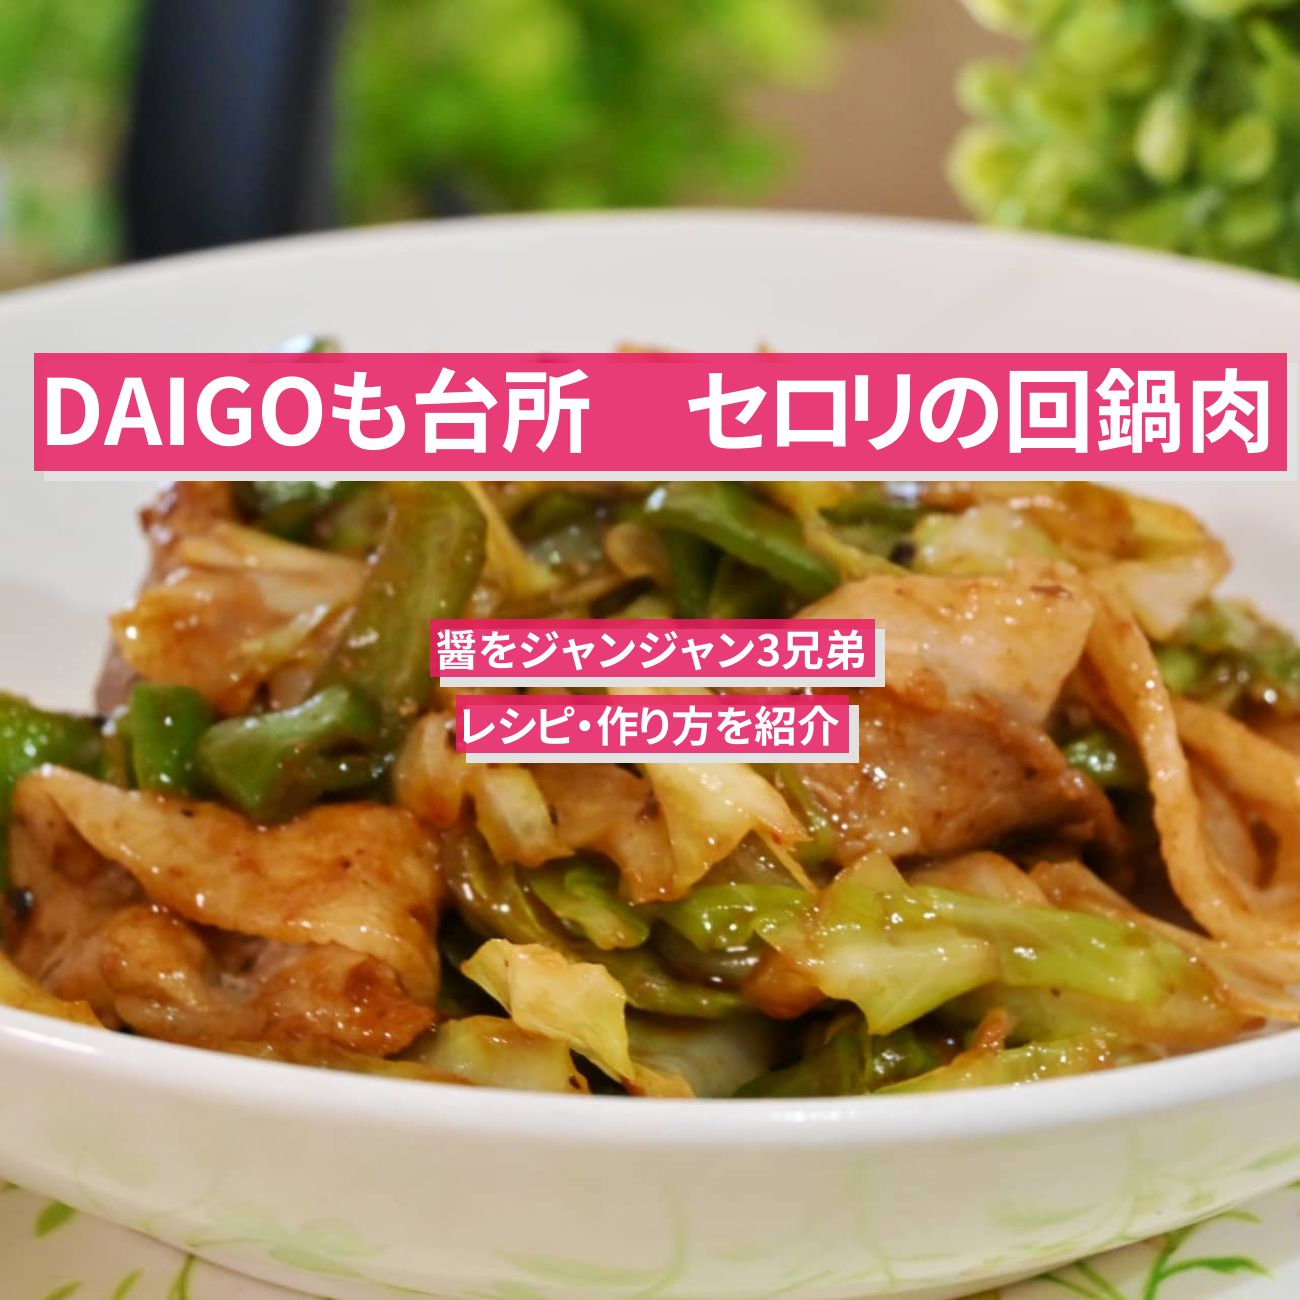 【DAIGOも台所】『セロリの回鍋肉』のレシピ・作り方を紹介